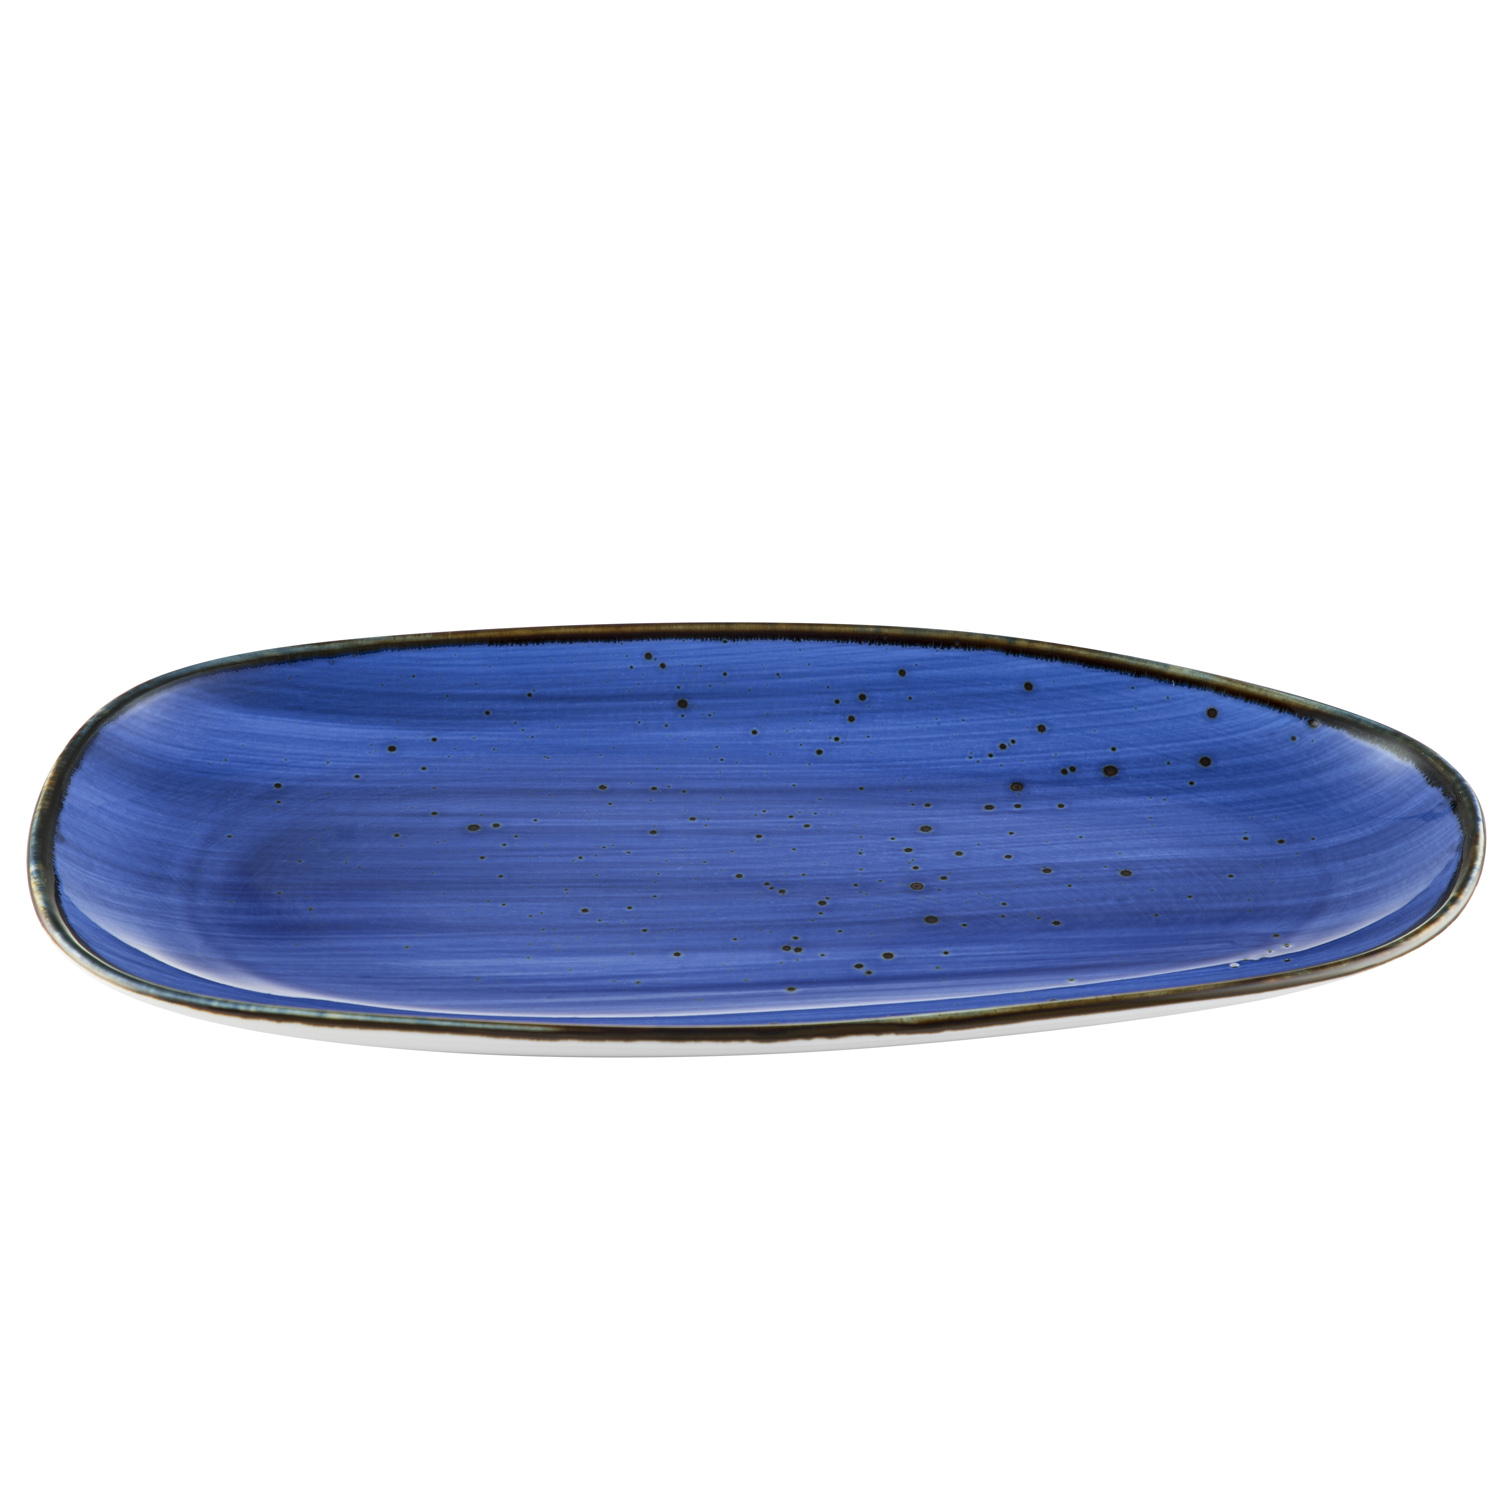 CAC China TUS-614-BLU Tucson Starry Night Blue Porcelain Platter 13"  - 1 dozen